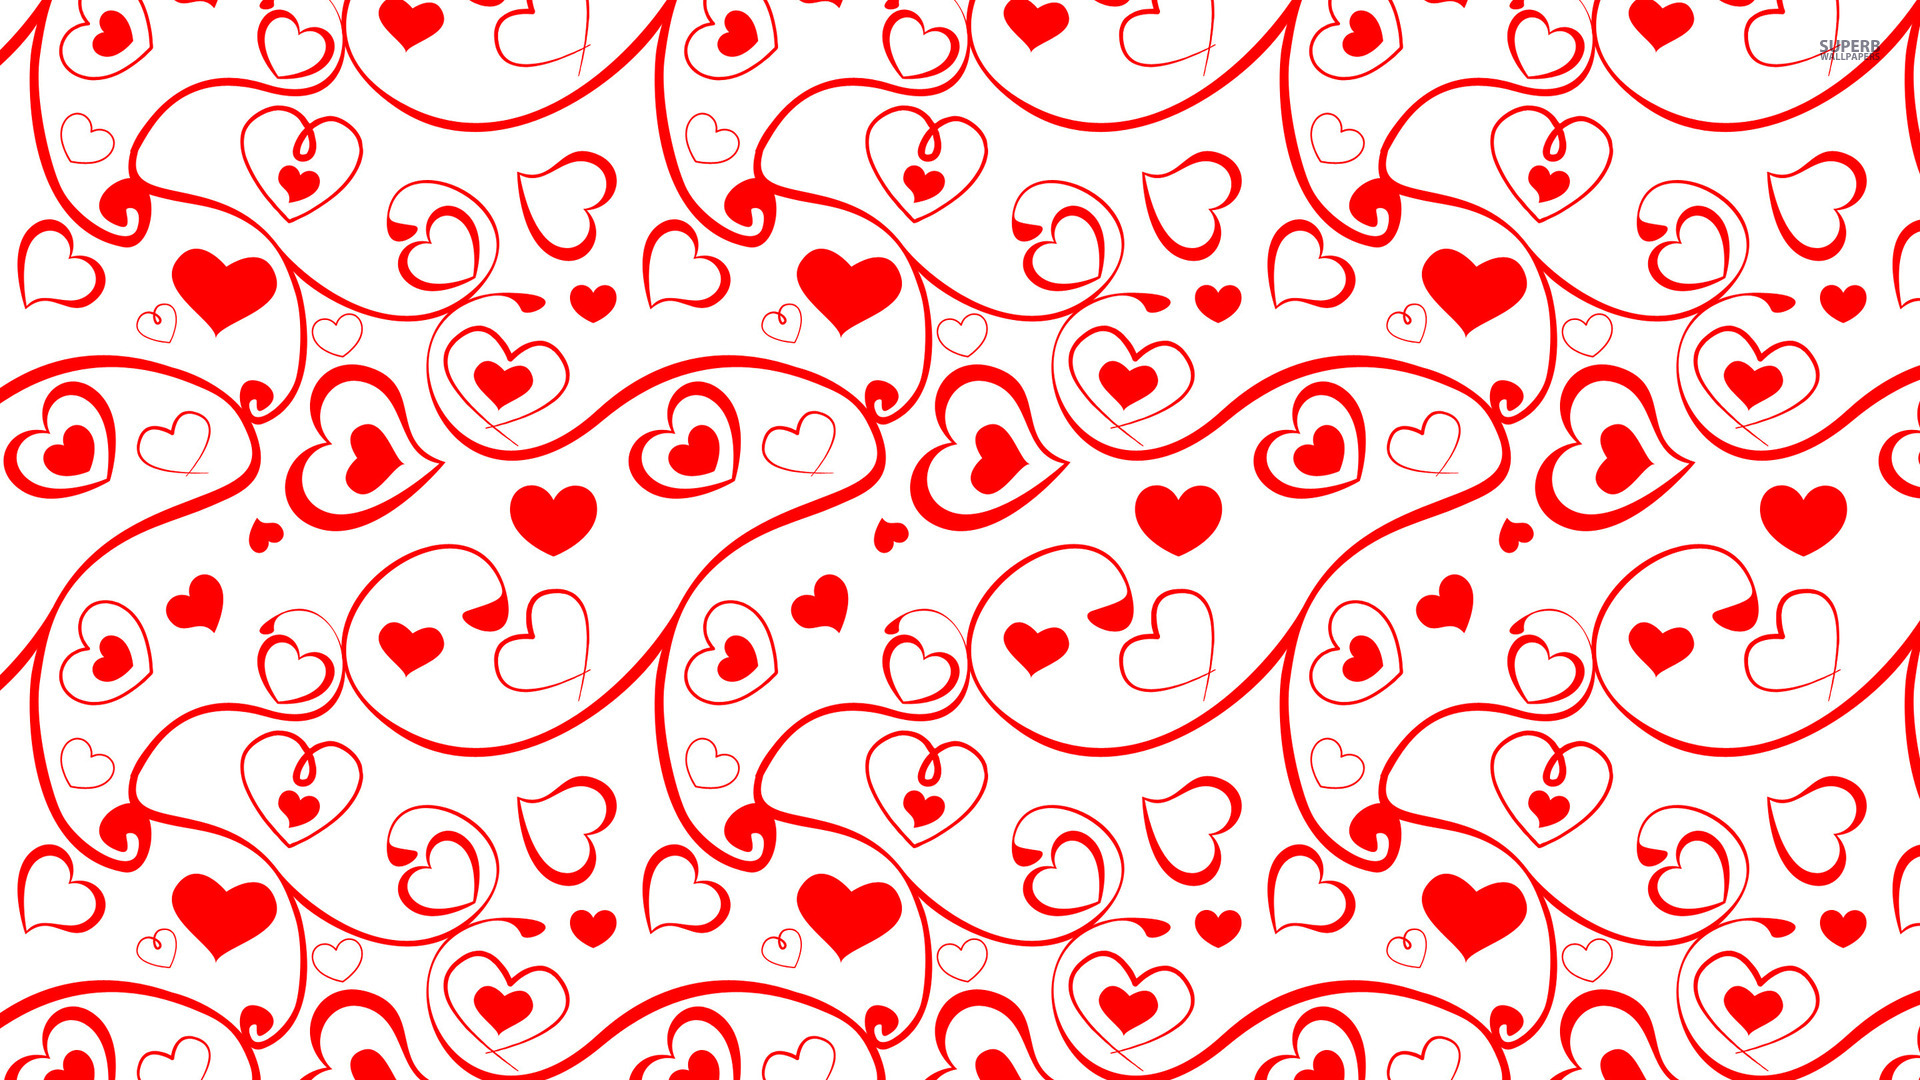 Heart and swirl pattern wallpaper 1920x1080